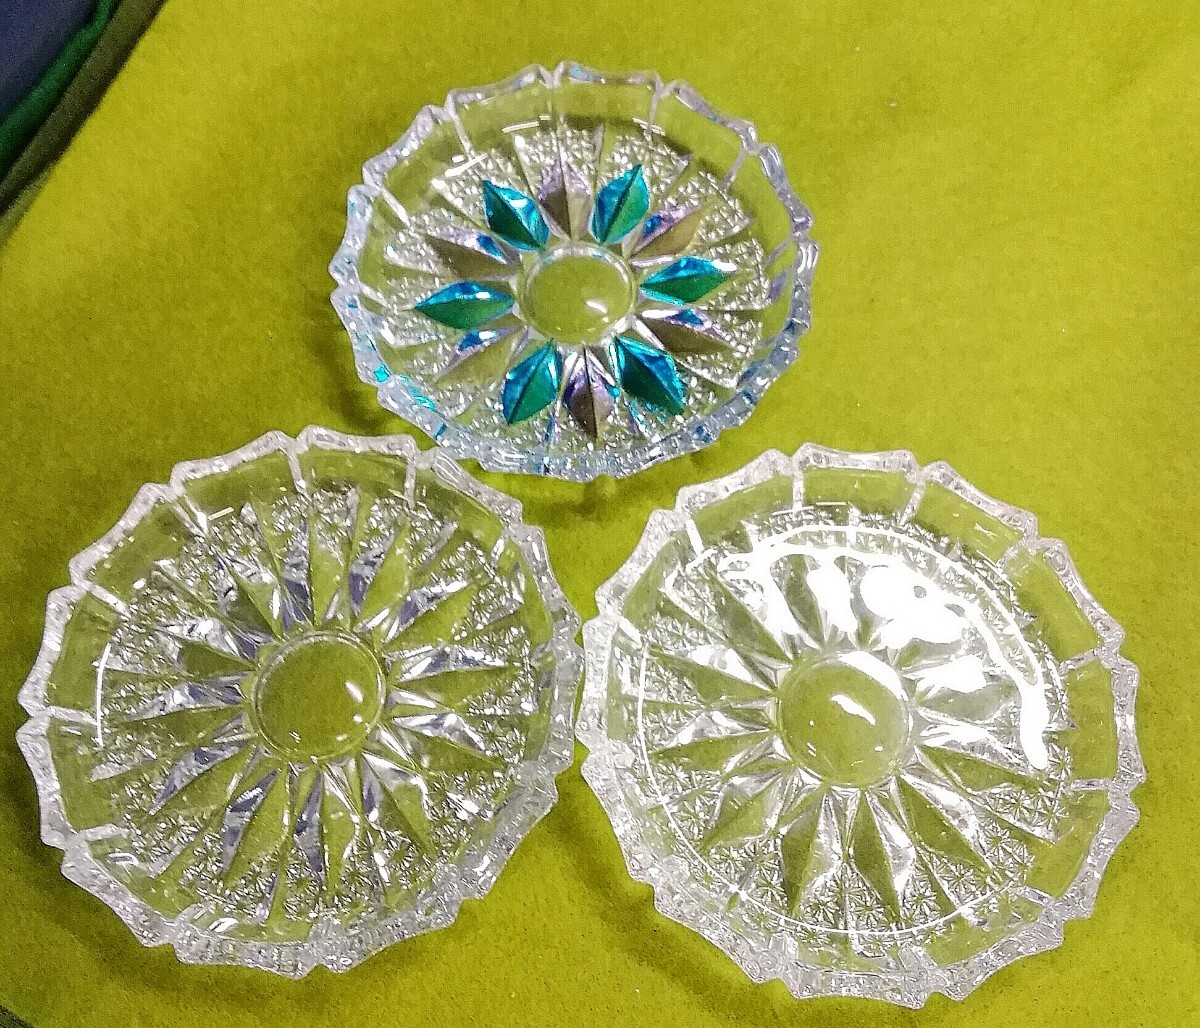 g_t U792 昭和レトロ ガラス製豆皿 三枚組 キラキラしていて夏らしい小皿です。中古の画像2